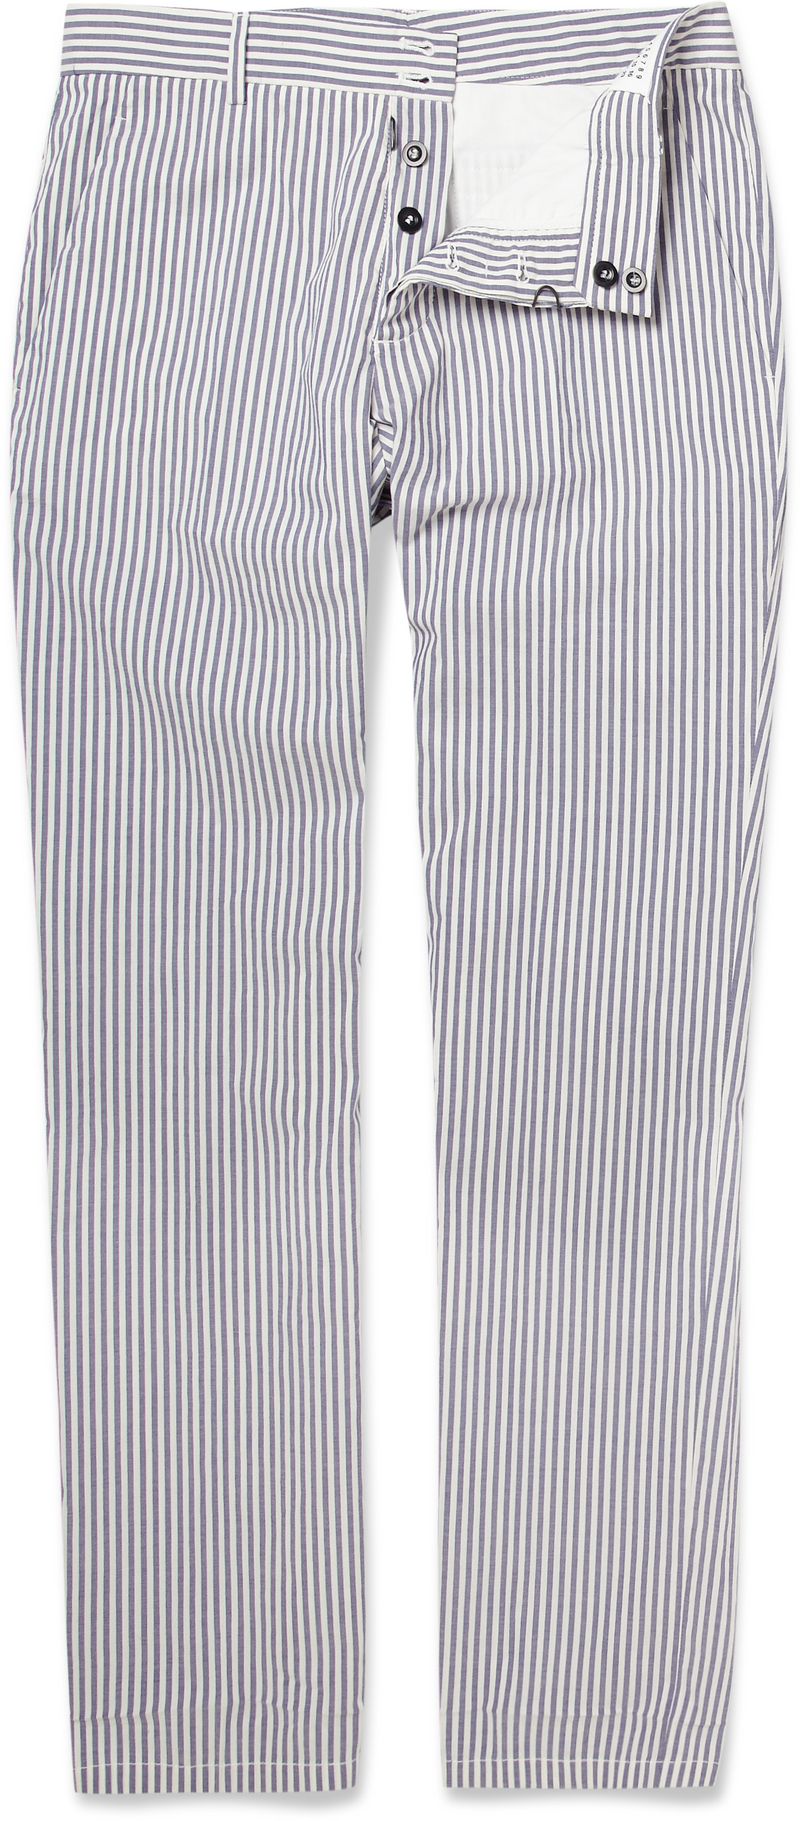 180168 Margiela striped trousers